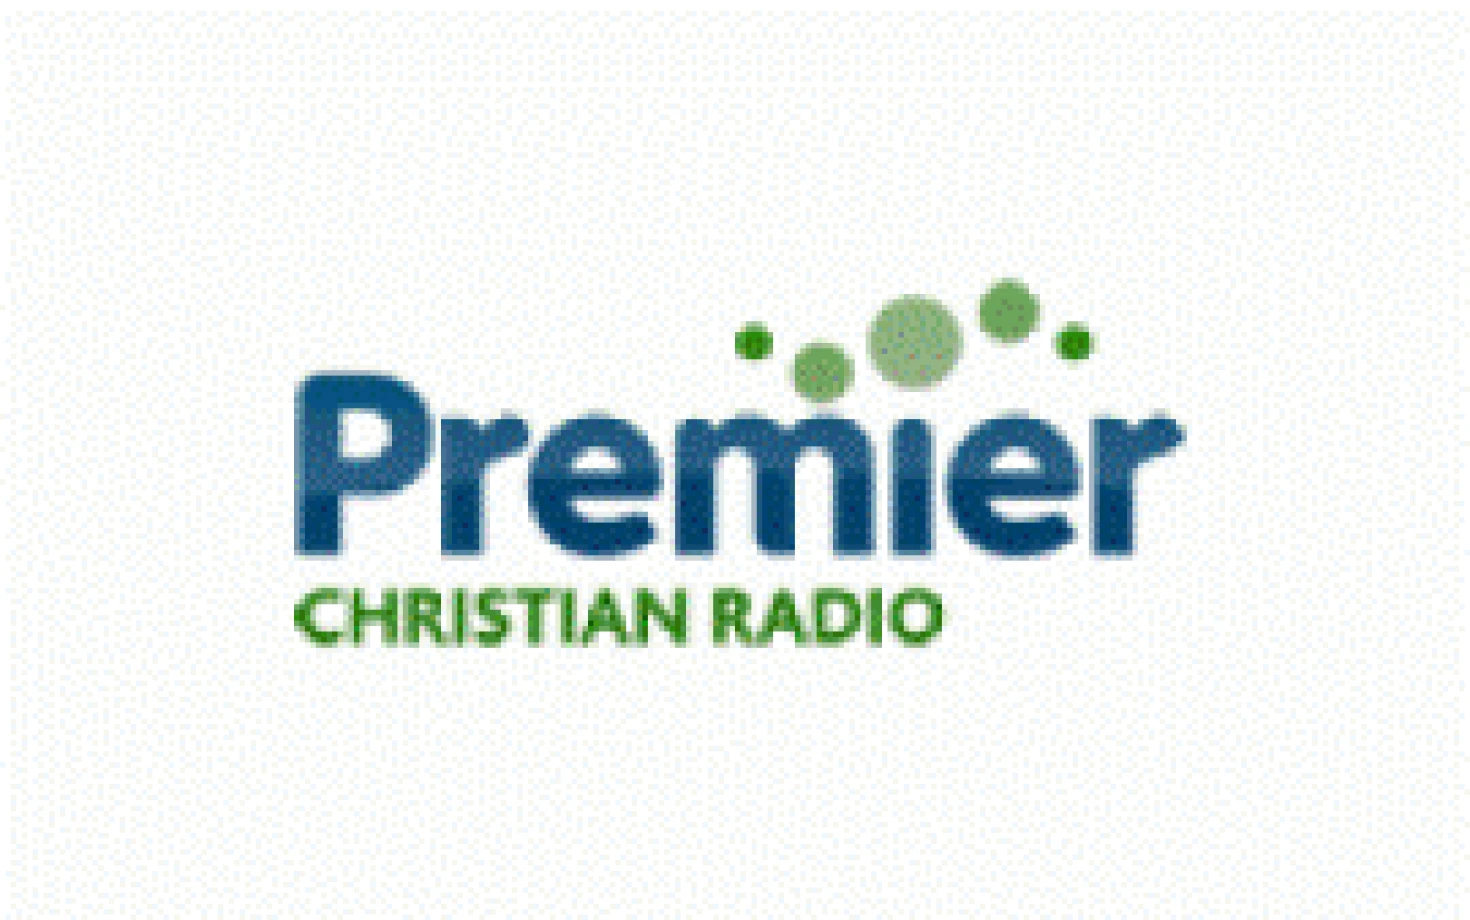 Premier Christian Radio launches on DAB digital